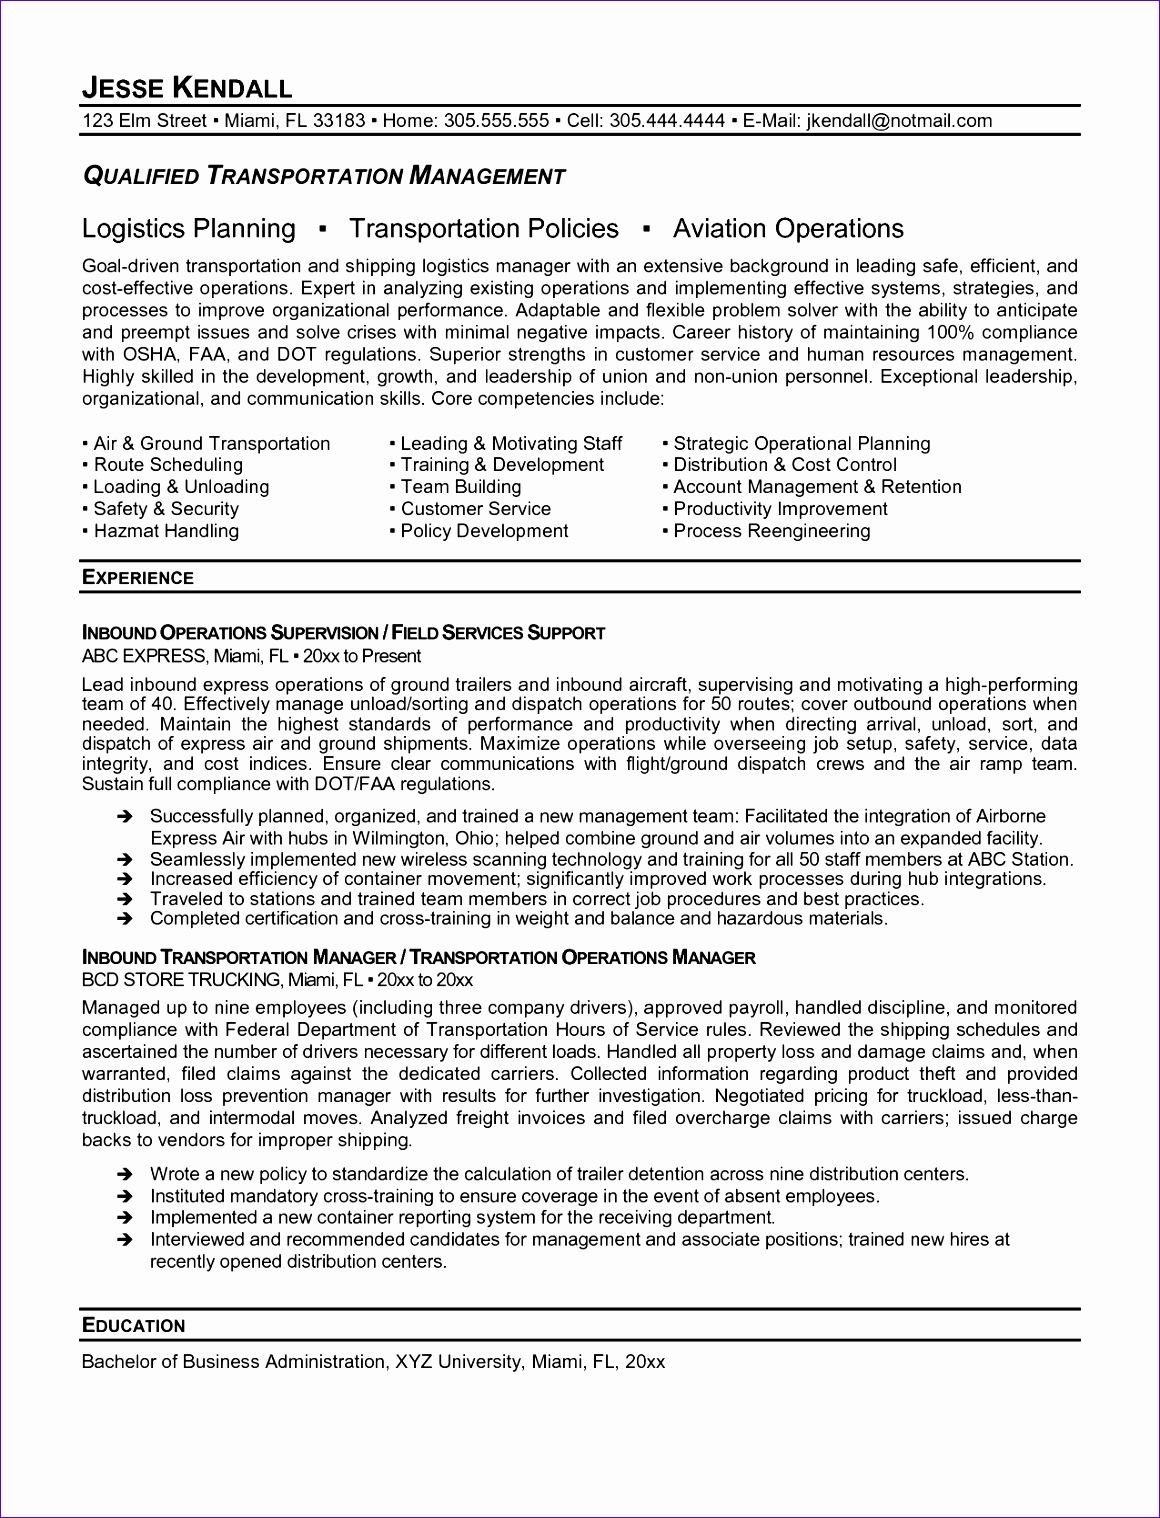 Transportation Resume Exles Logistics Manager Templates Cv Job Description Sles Transport Supply Chain Work